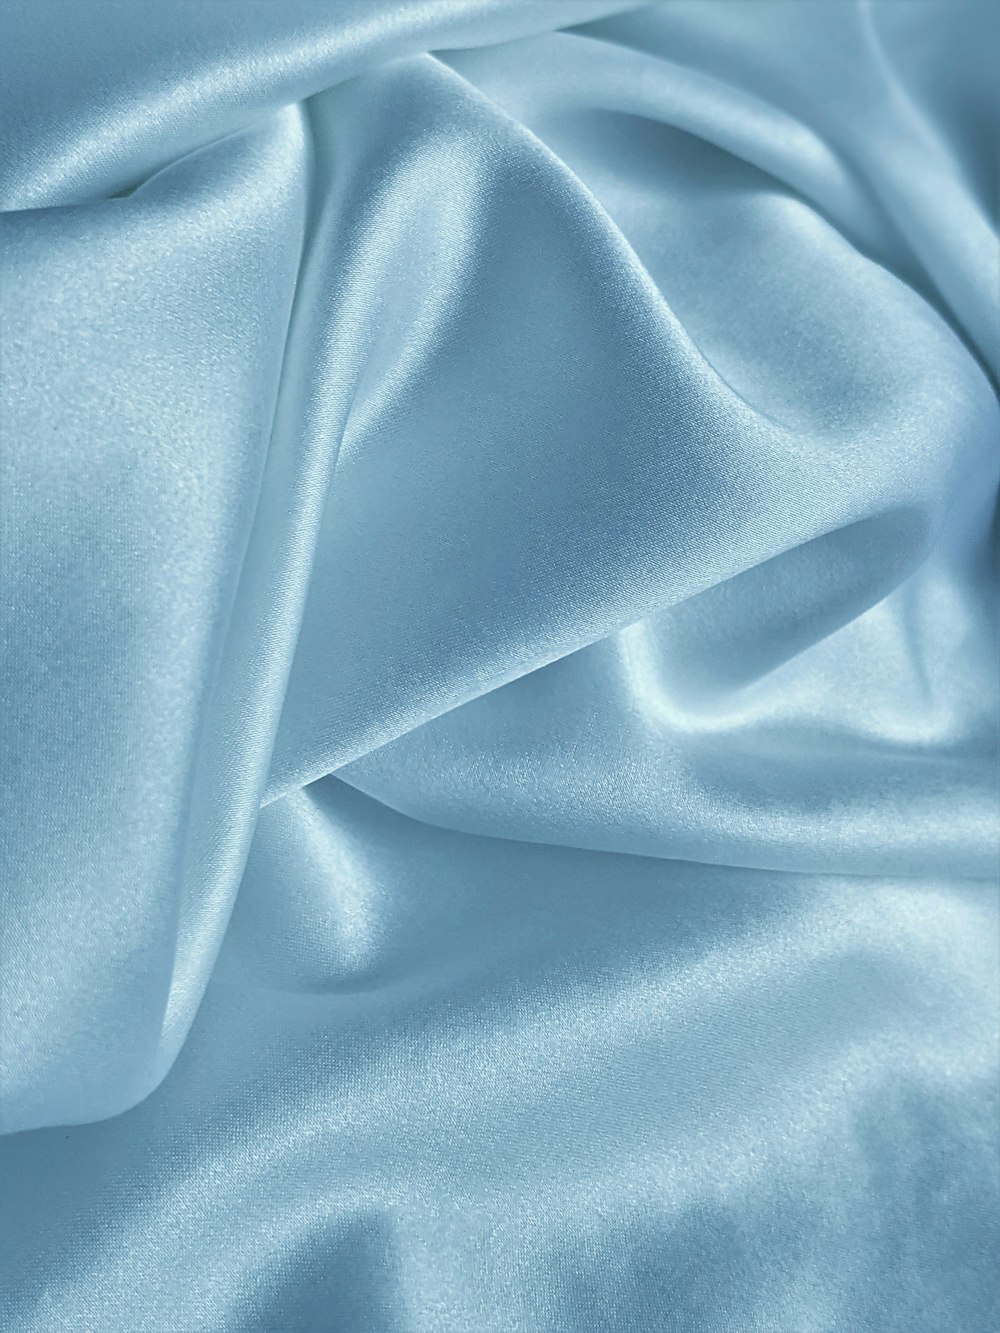 textil azul sobre textil blanco